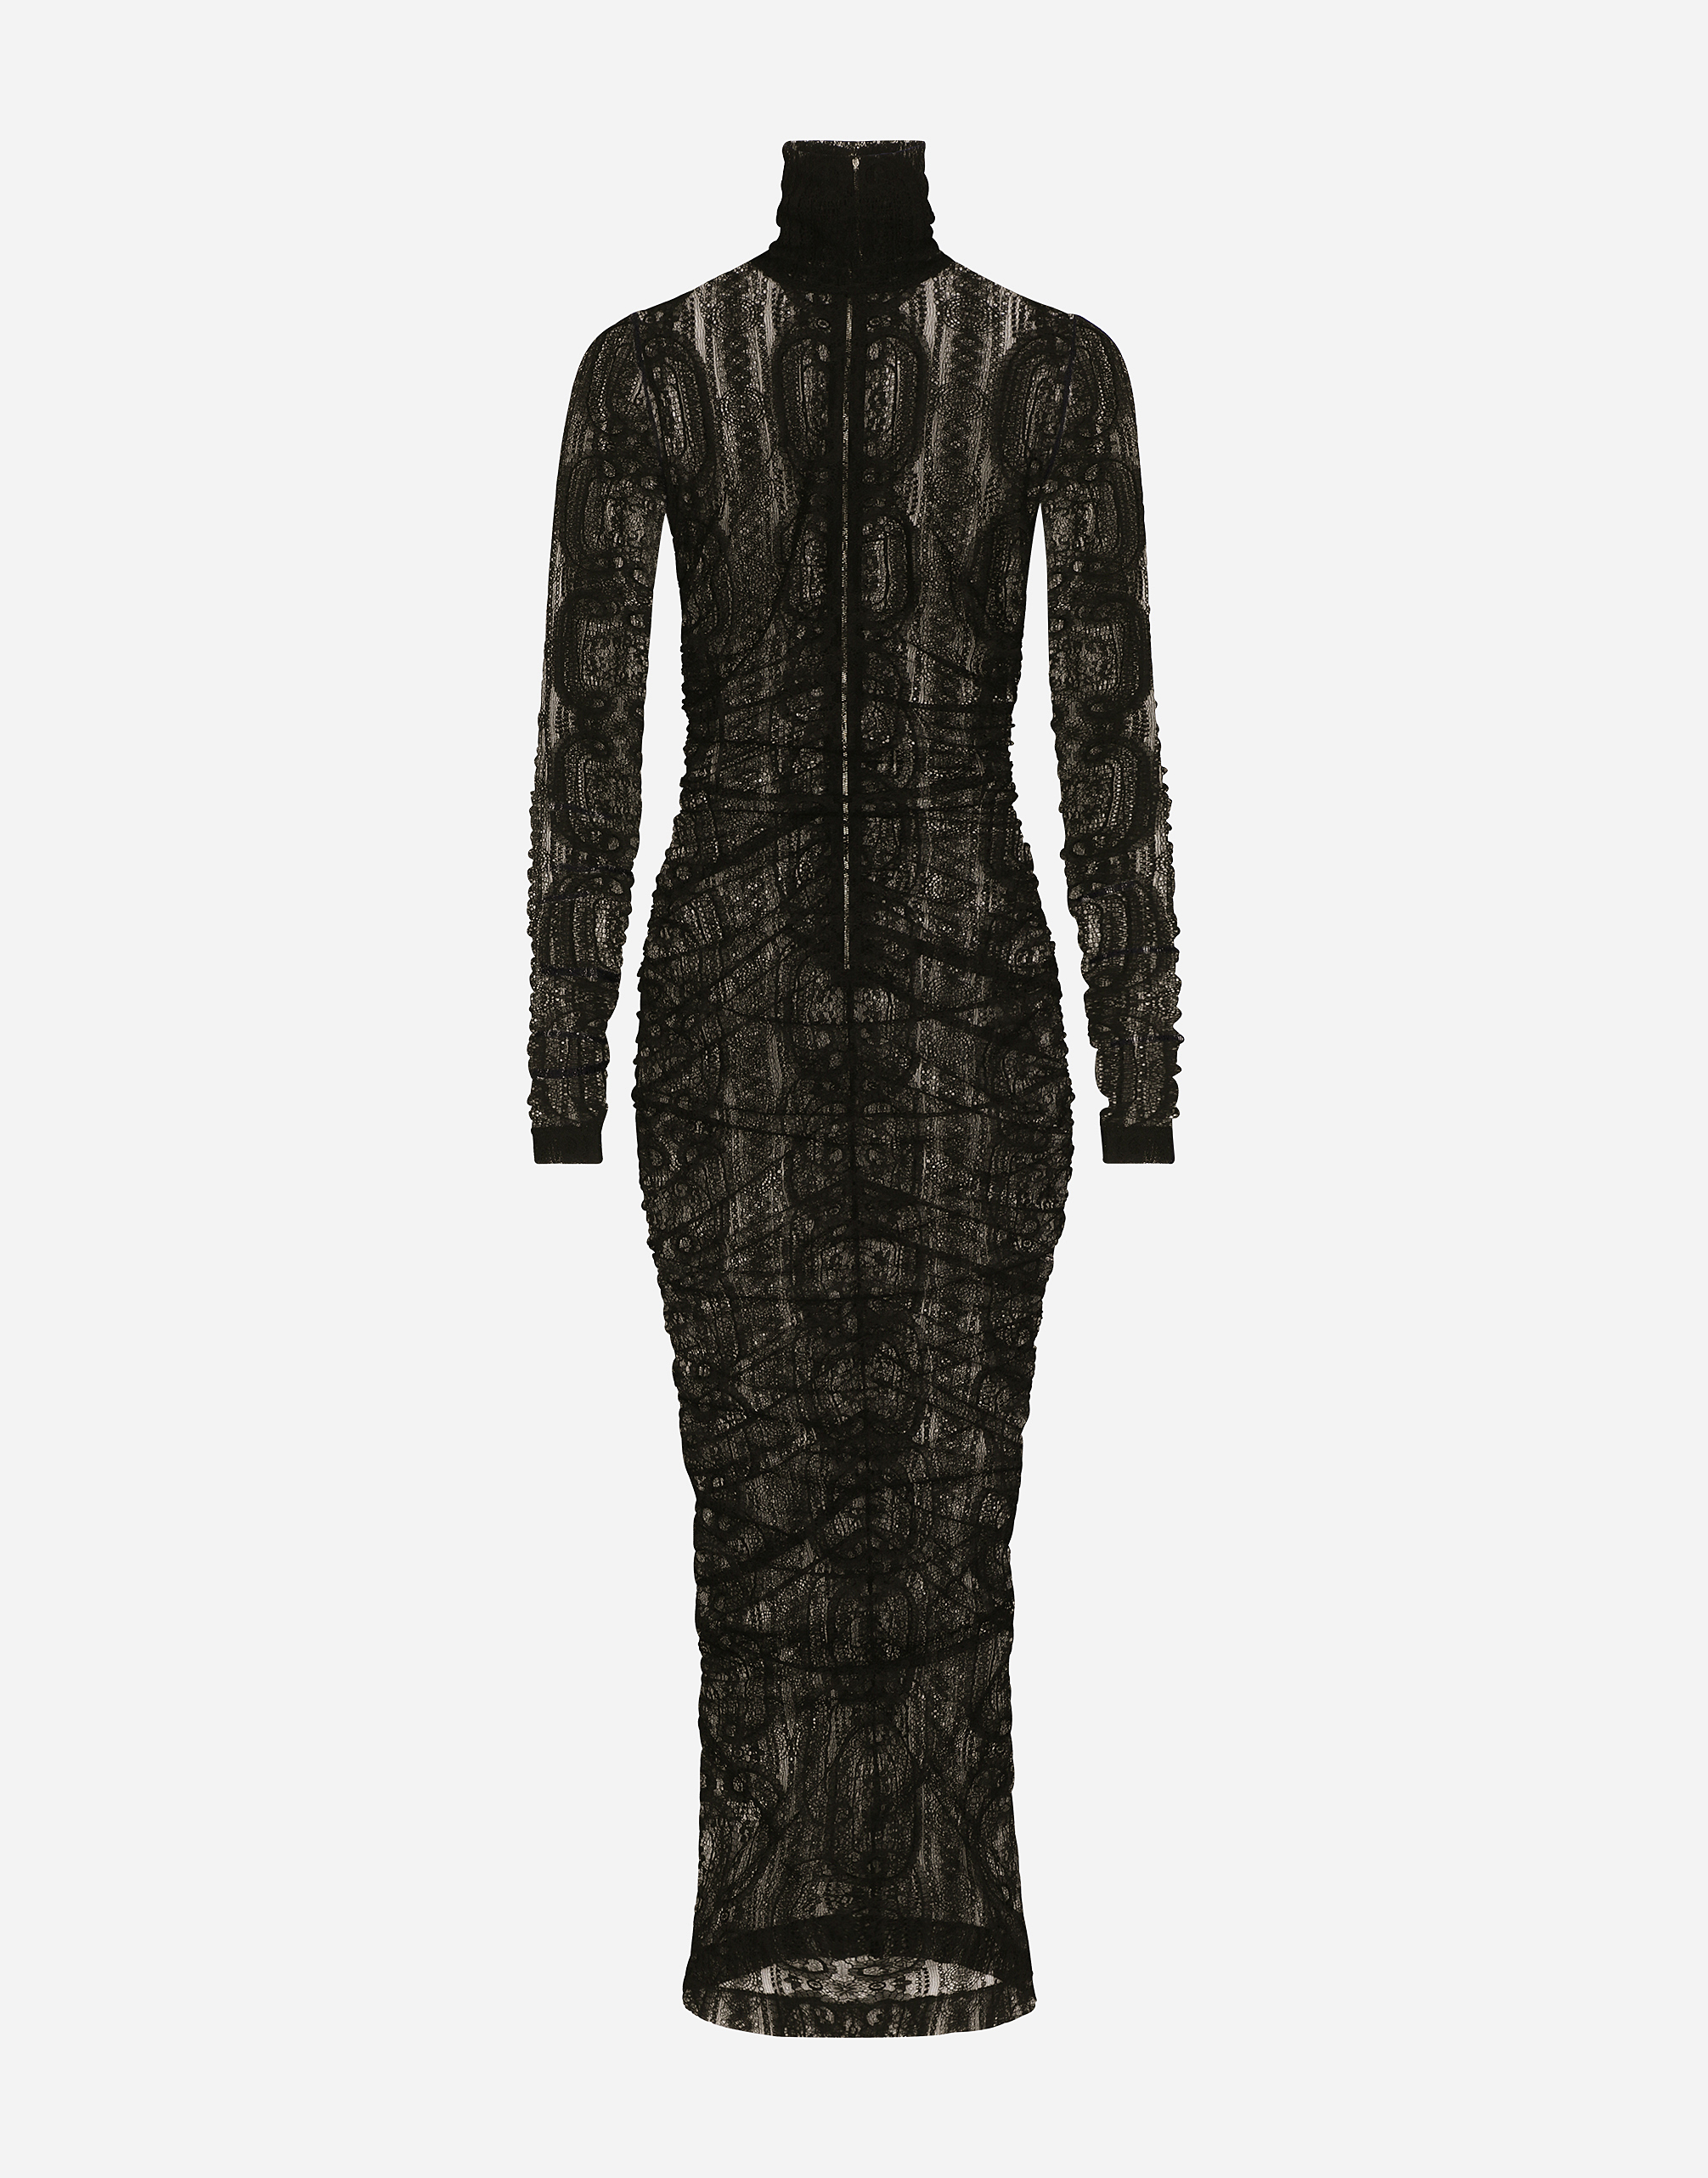 Lace calf-length dress in Black